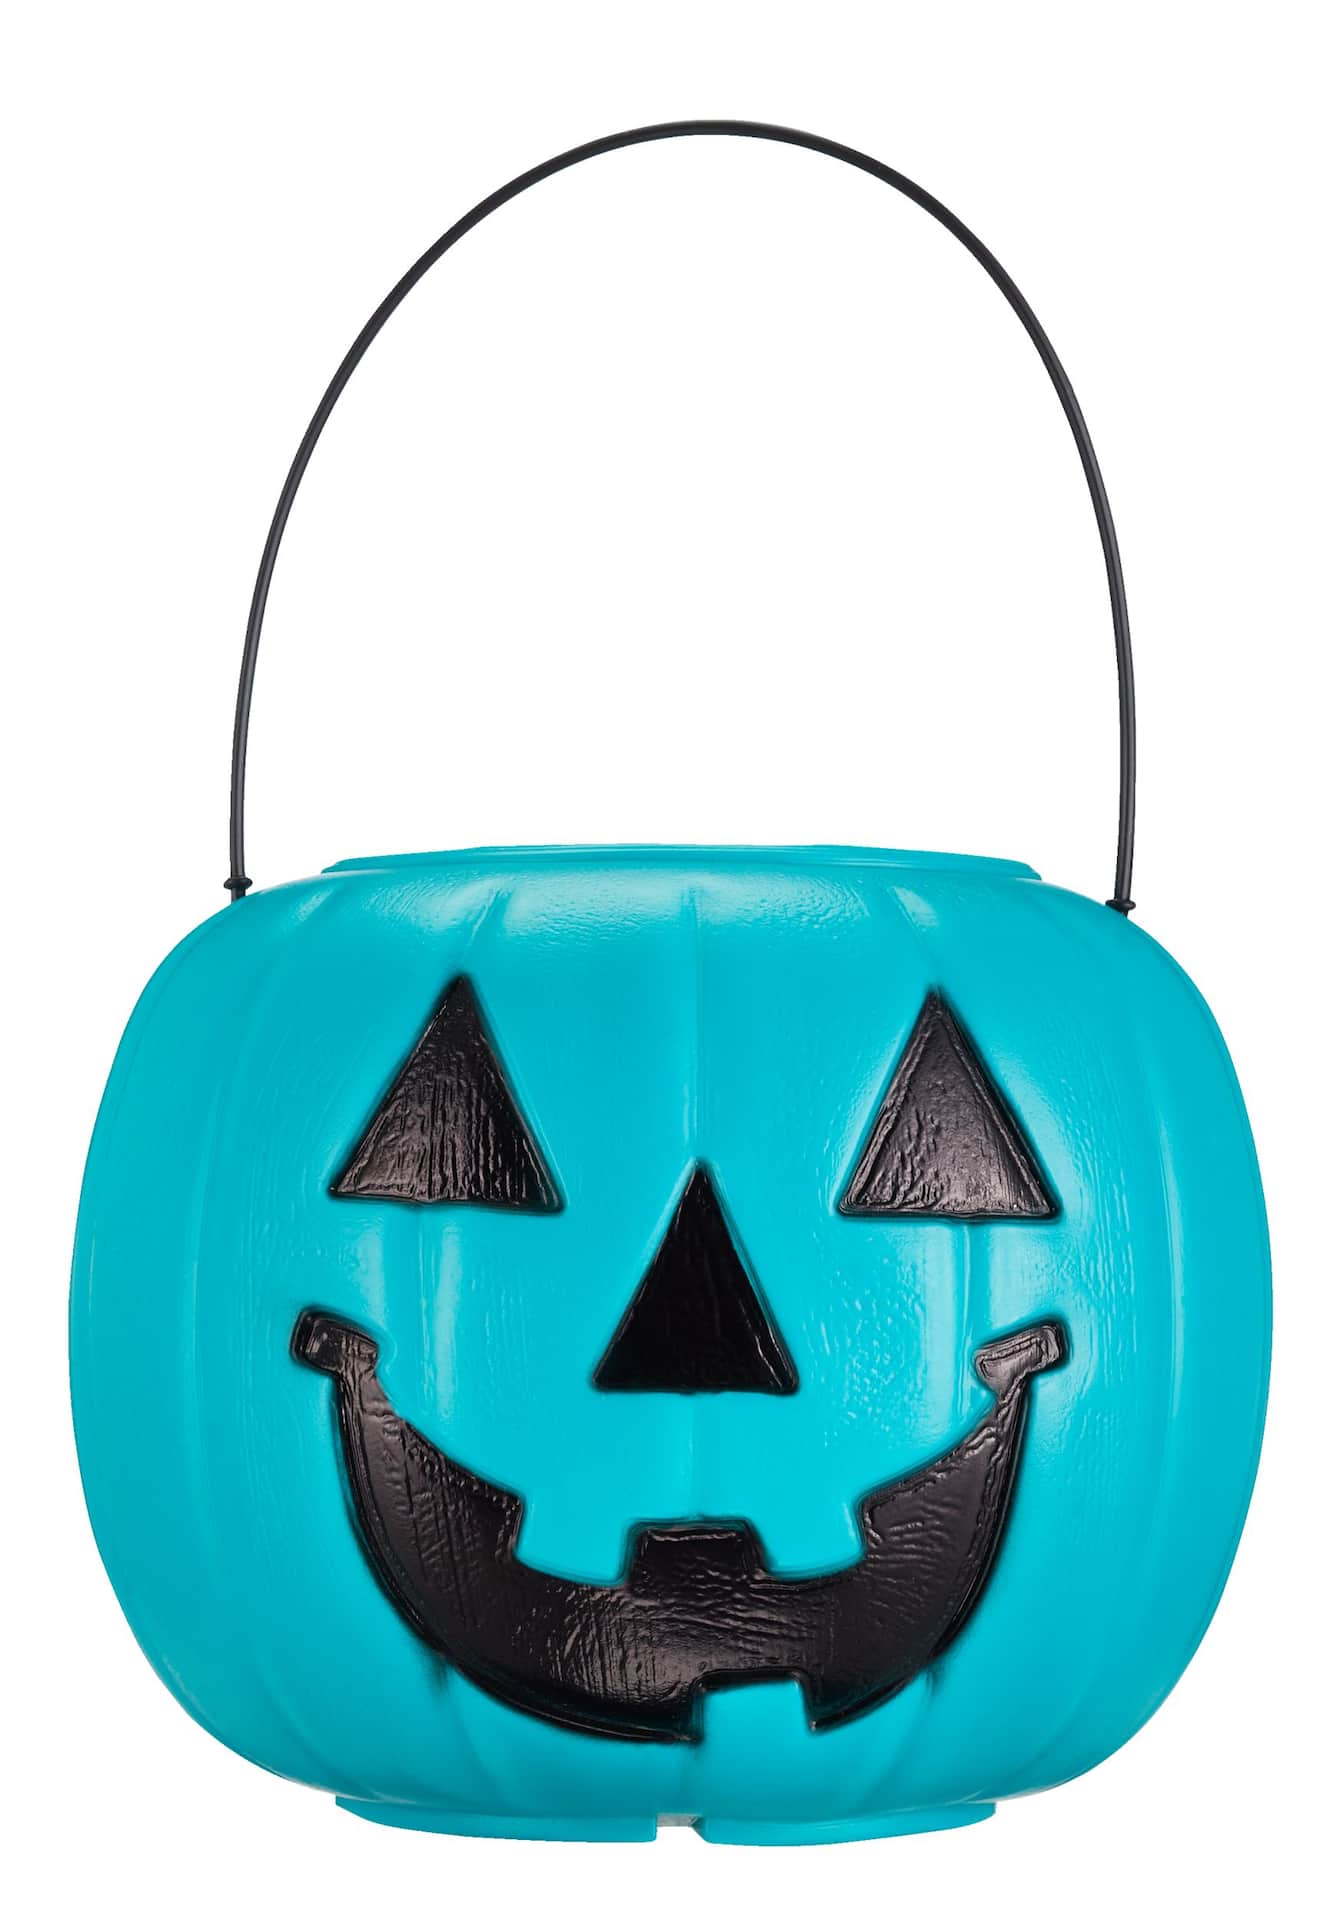 Jack-O'-Lantern Plastic Treat Pail Bucket, Teal Blue, 8.5-in, for Halloween